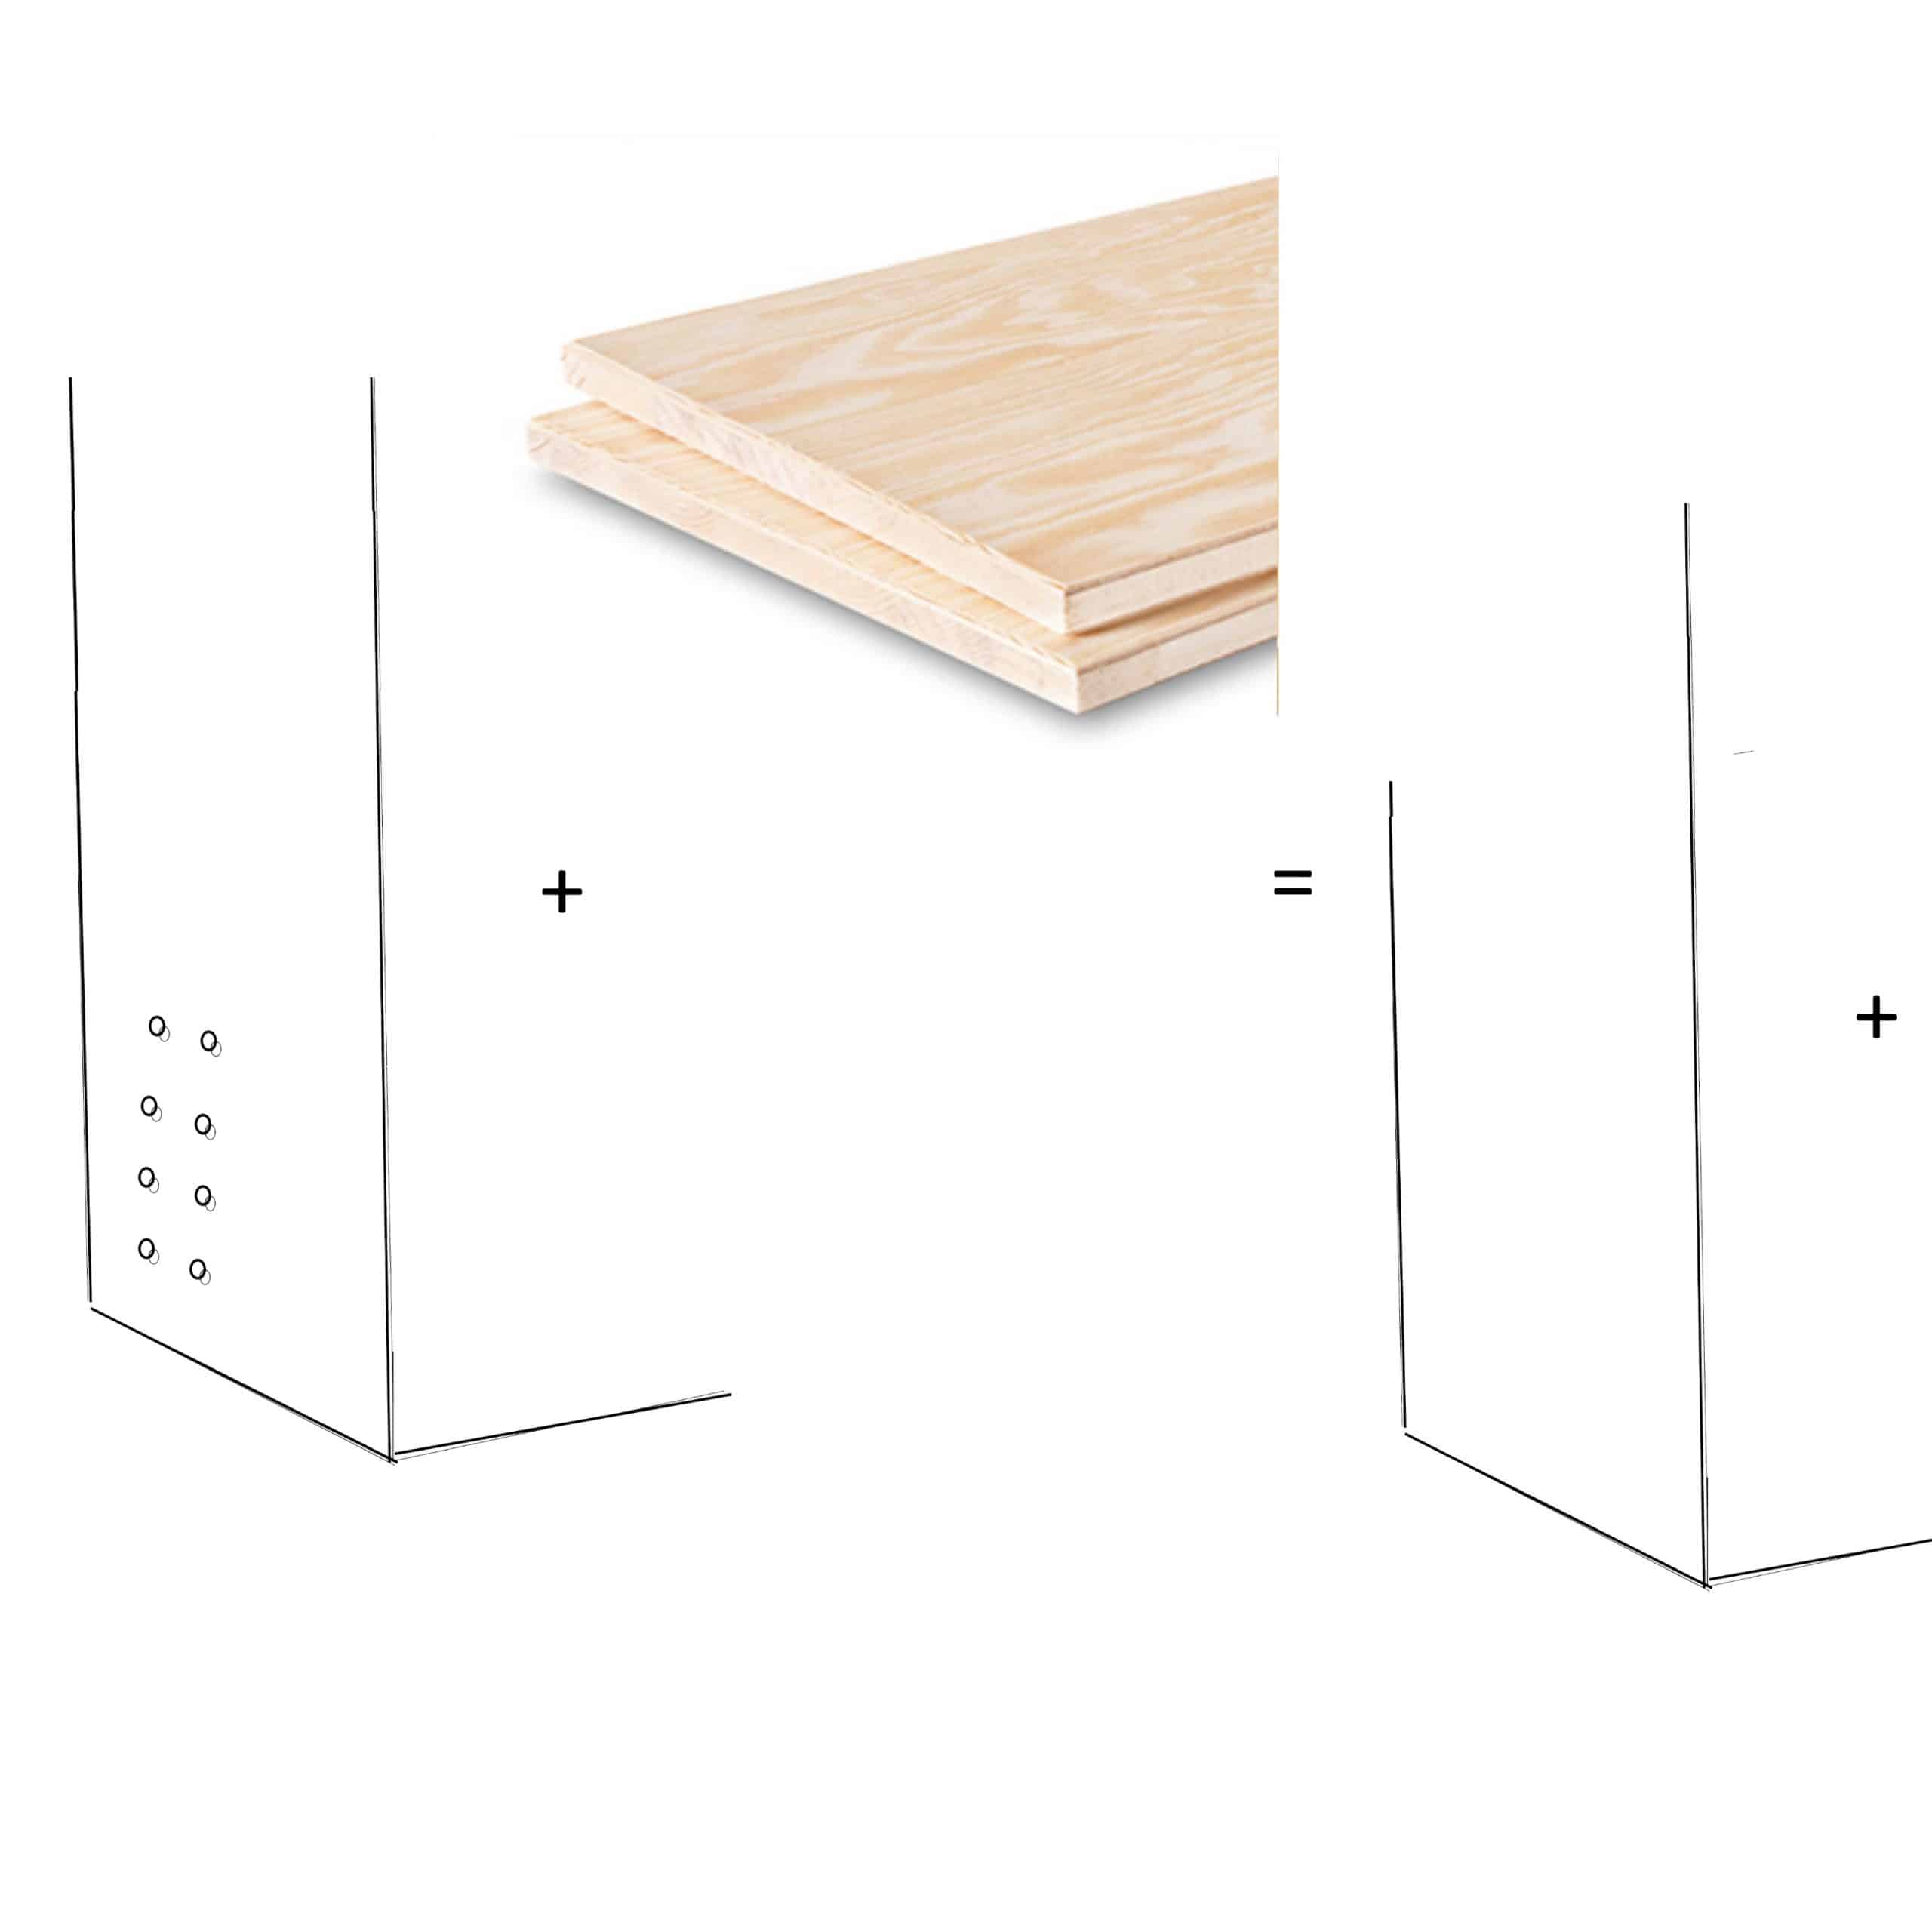 Täcksidor i furulamell / side covers in pine veneered block board